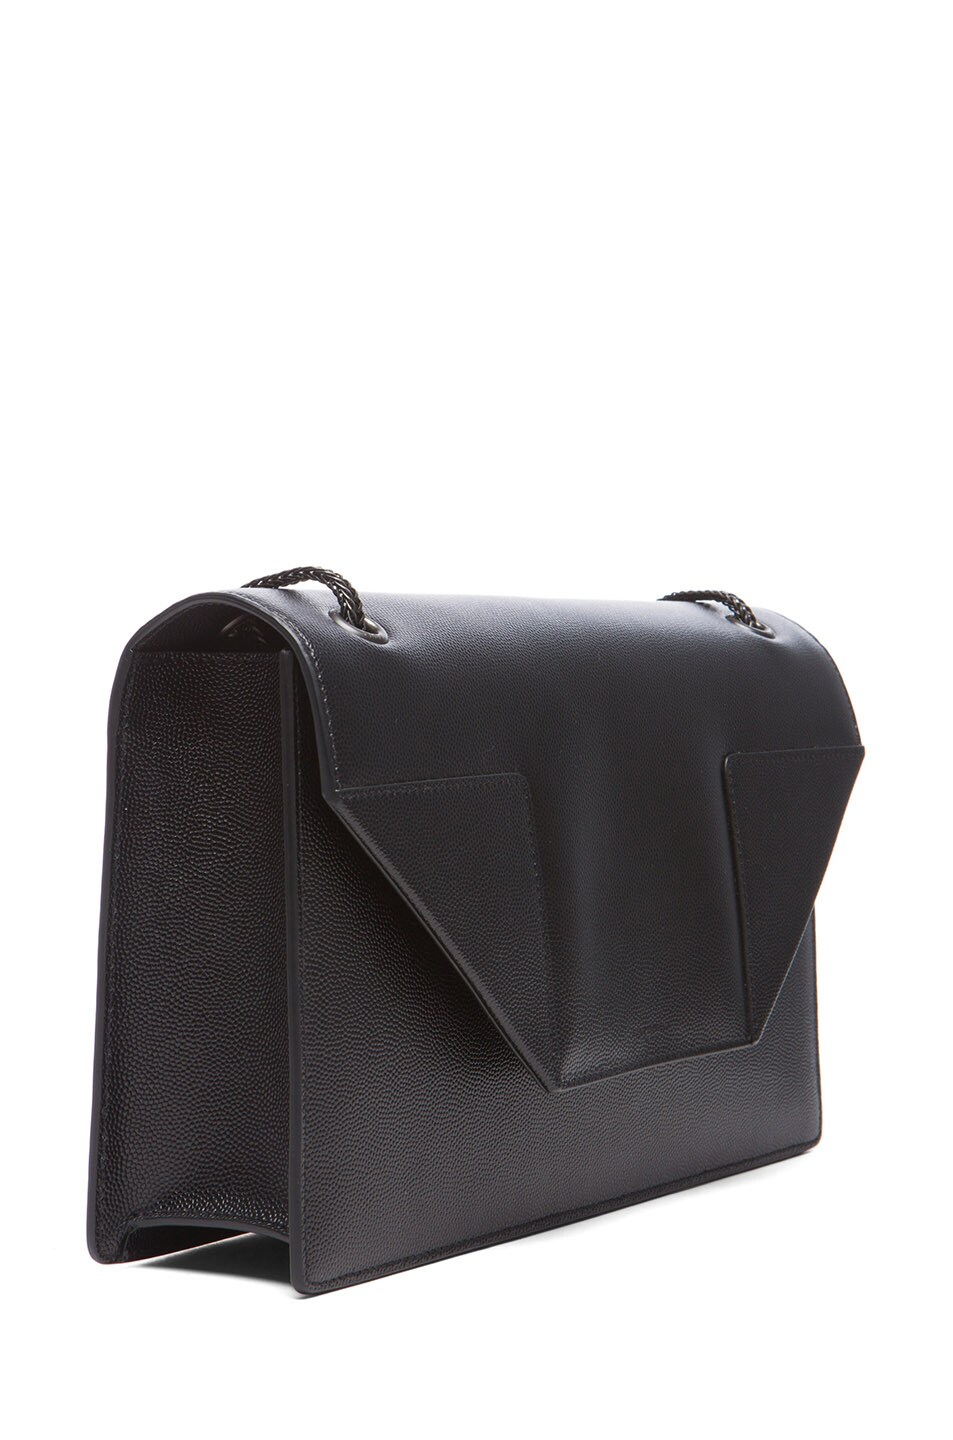 Saint Laurent Medium Betty Chain Bag in Black | FWRD